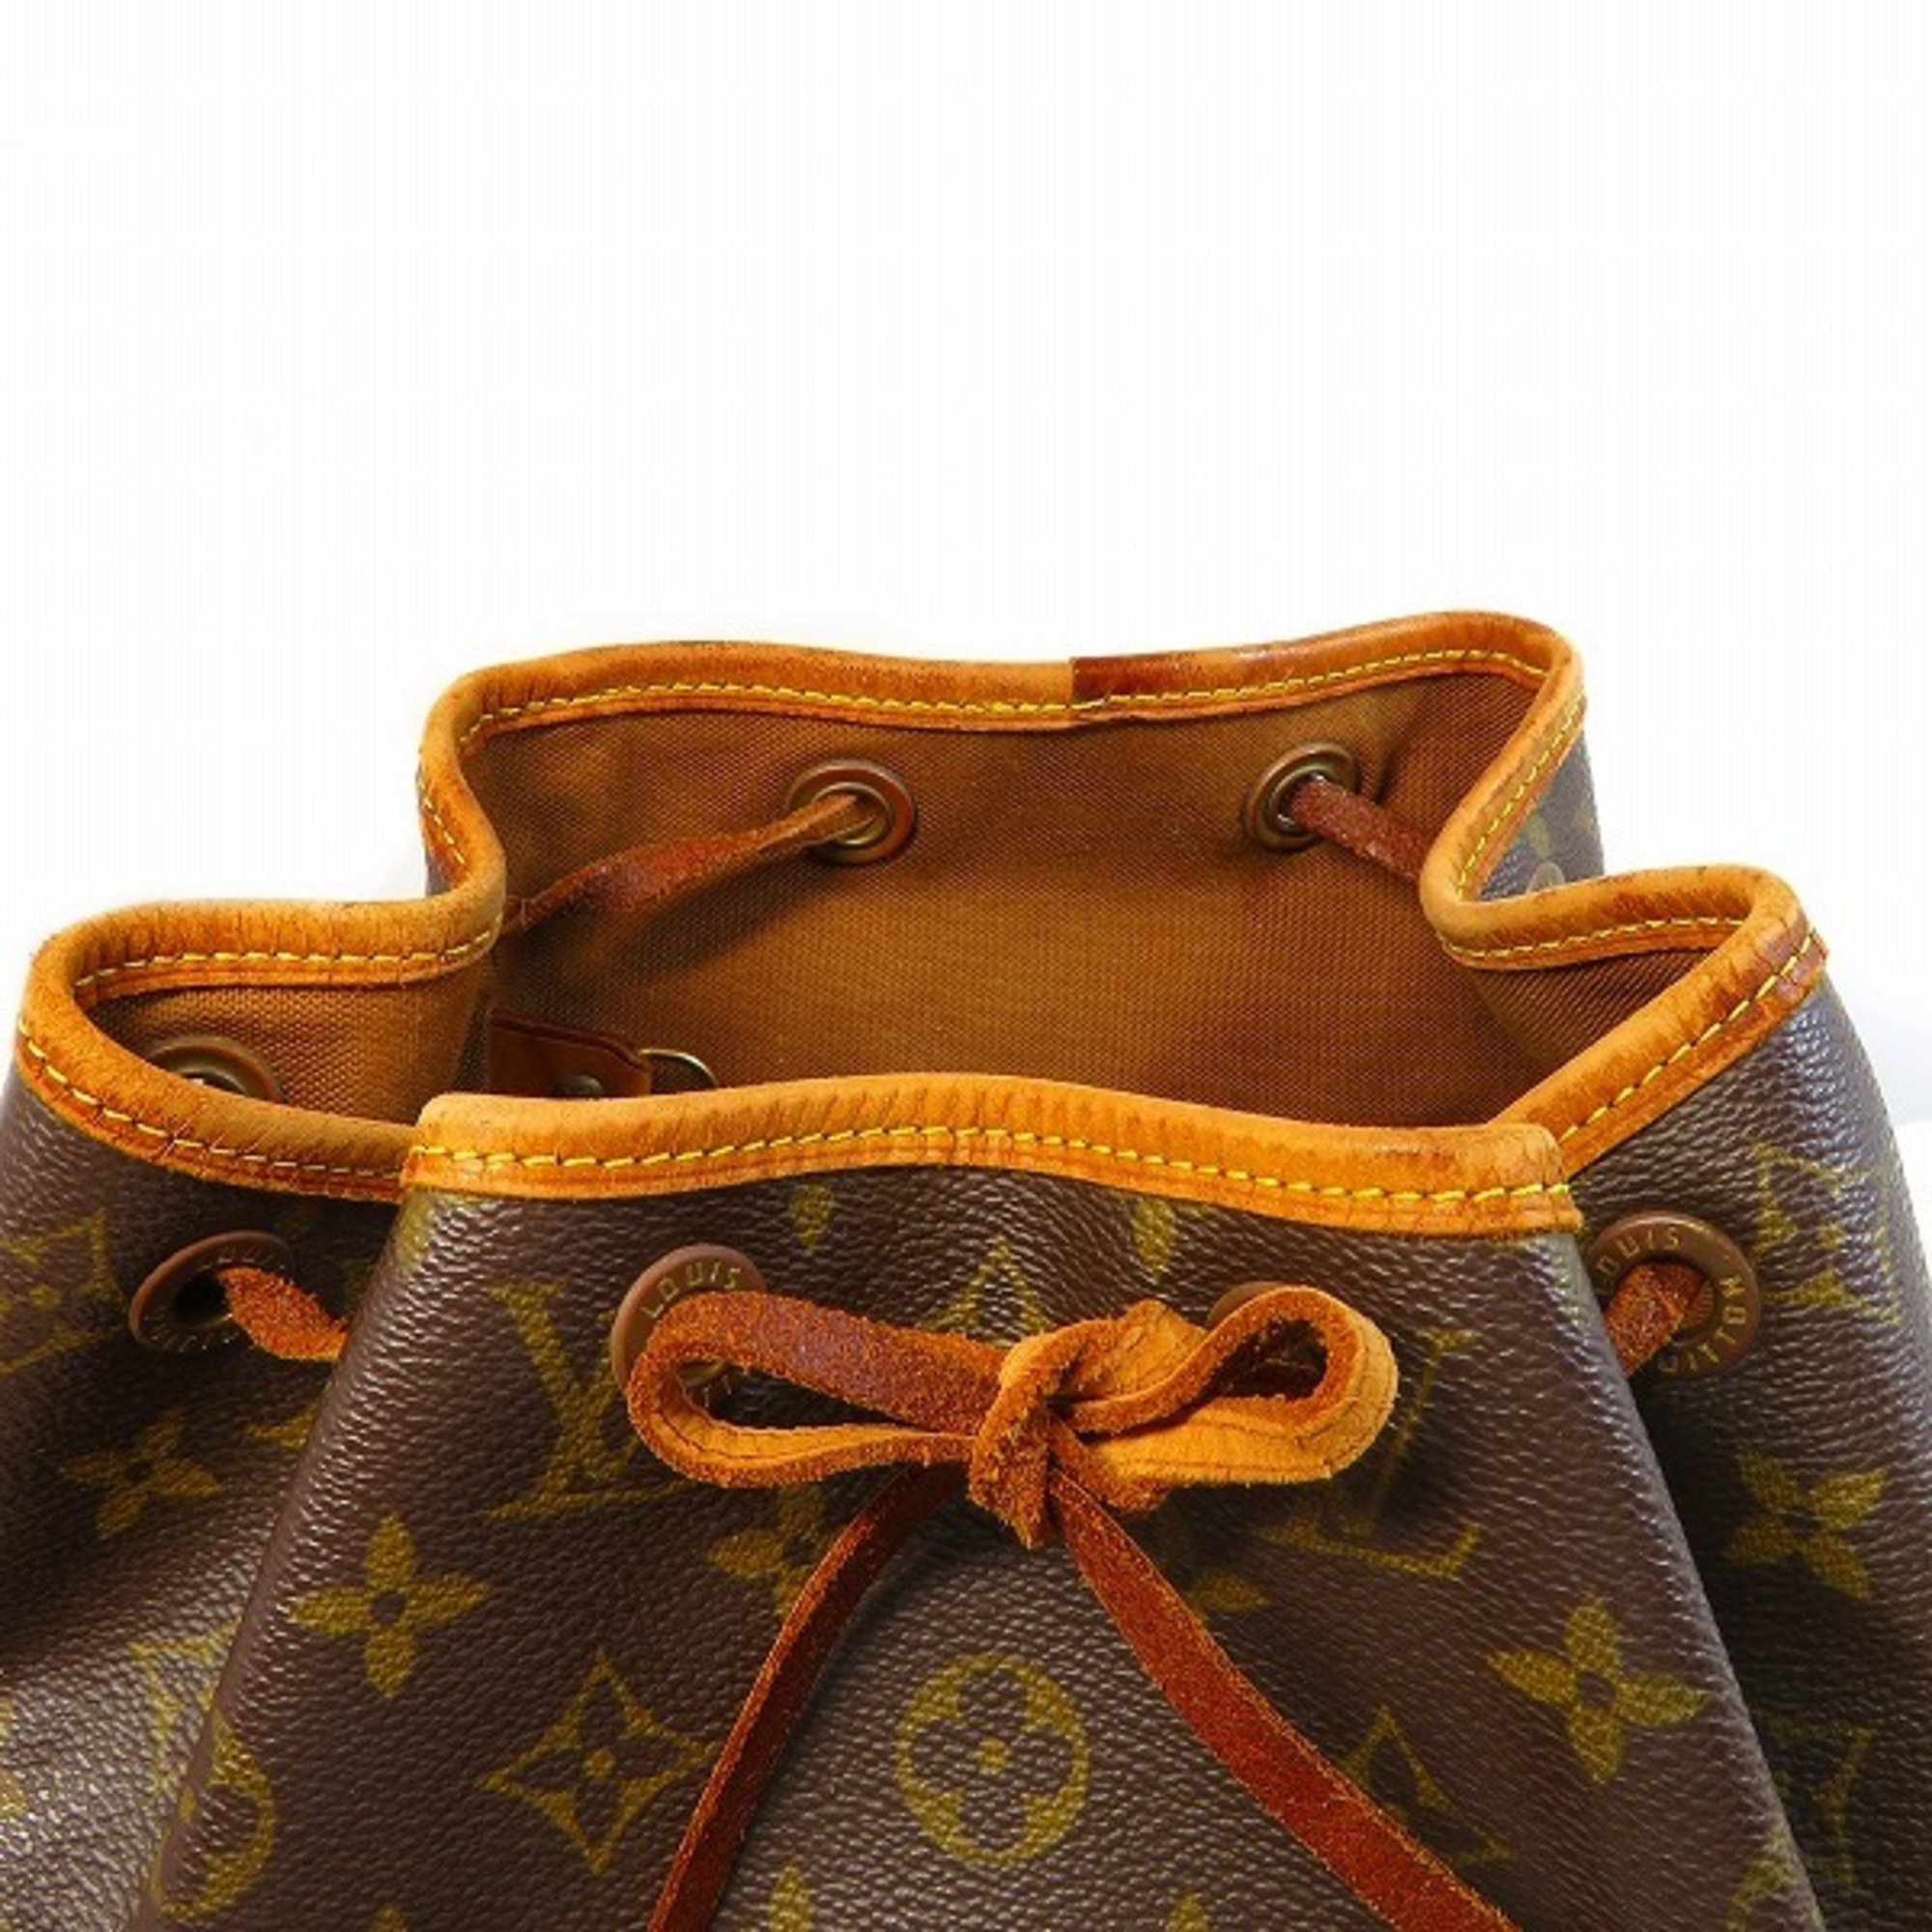 Louis Vuitton Monogram Montsouris MM M51136 Bag Backpack for Women